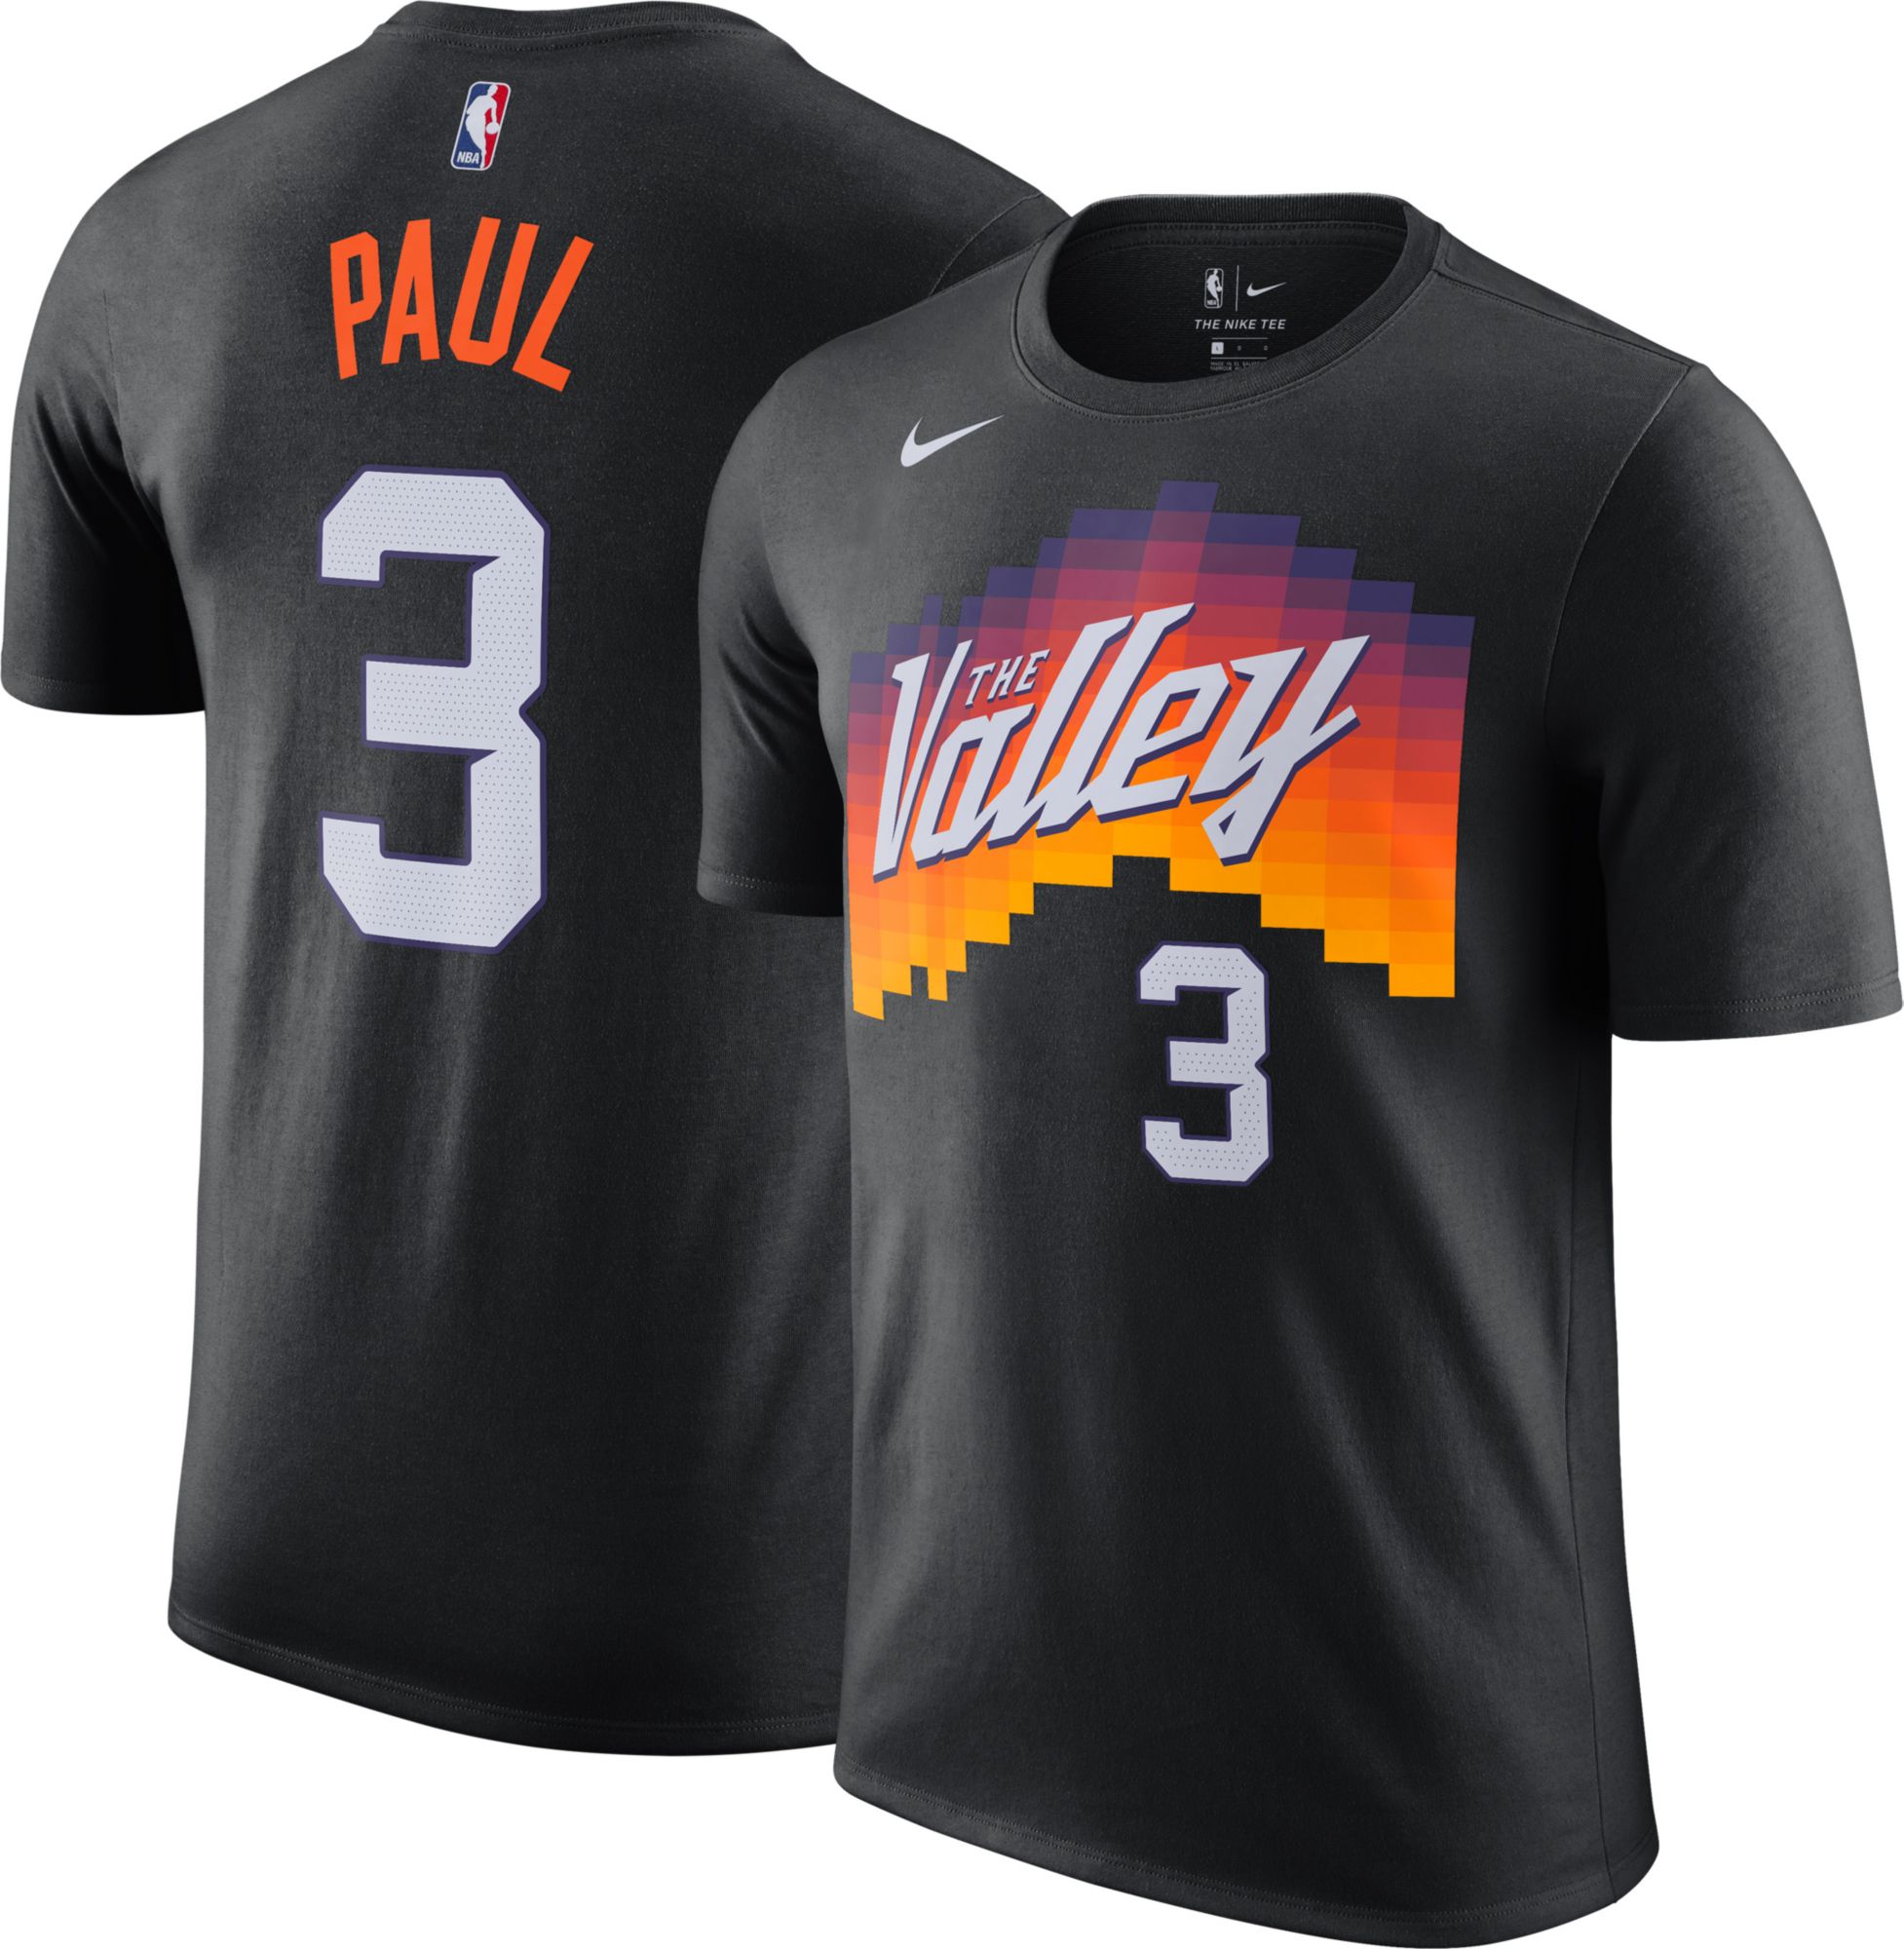 Gildan, Shirts, Vintage Nba Phoenix Suns Logo Sweatshirt Phoenix Suns  Shirt Nba All Star 222